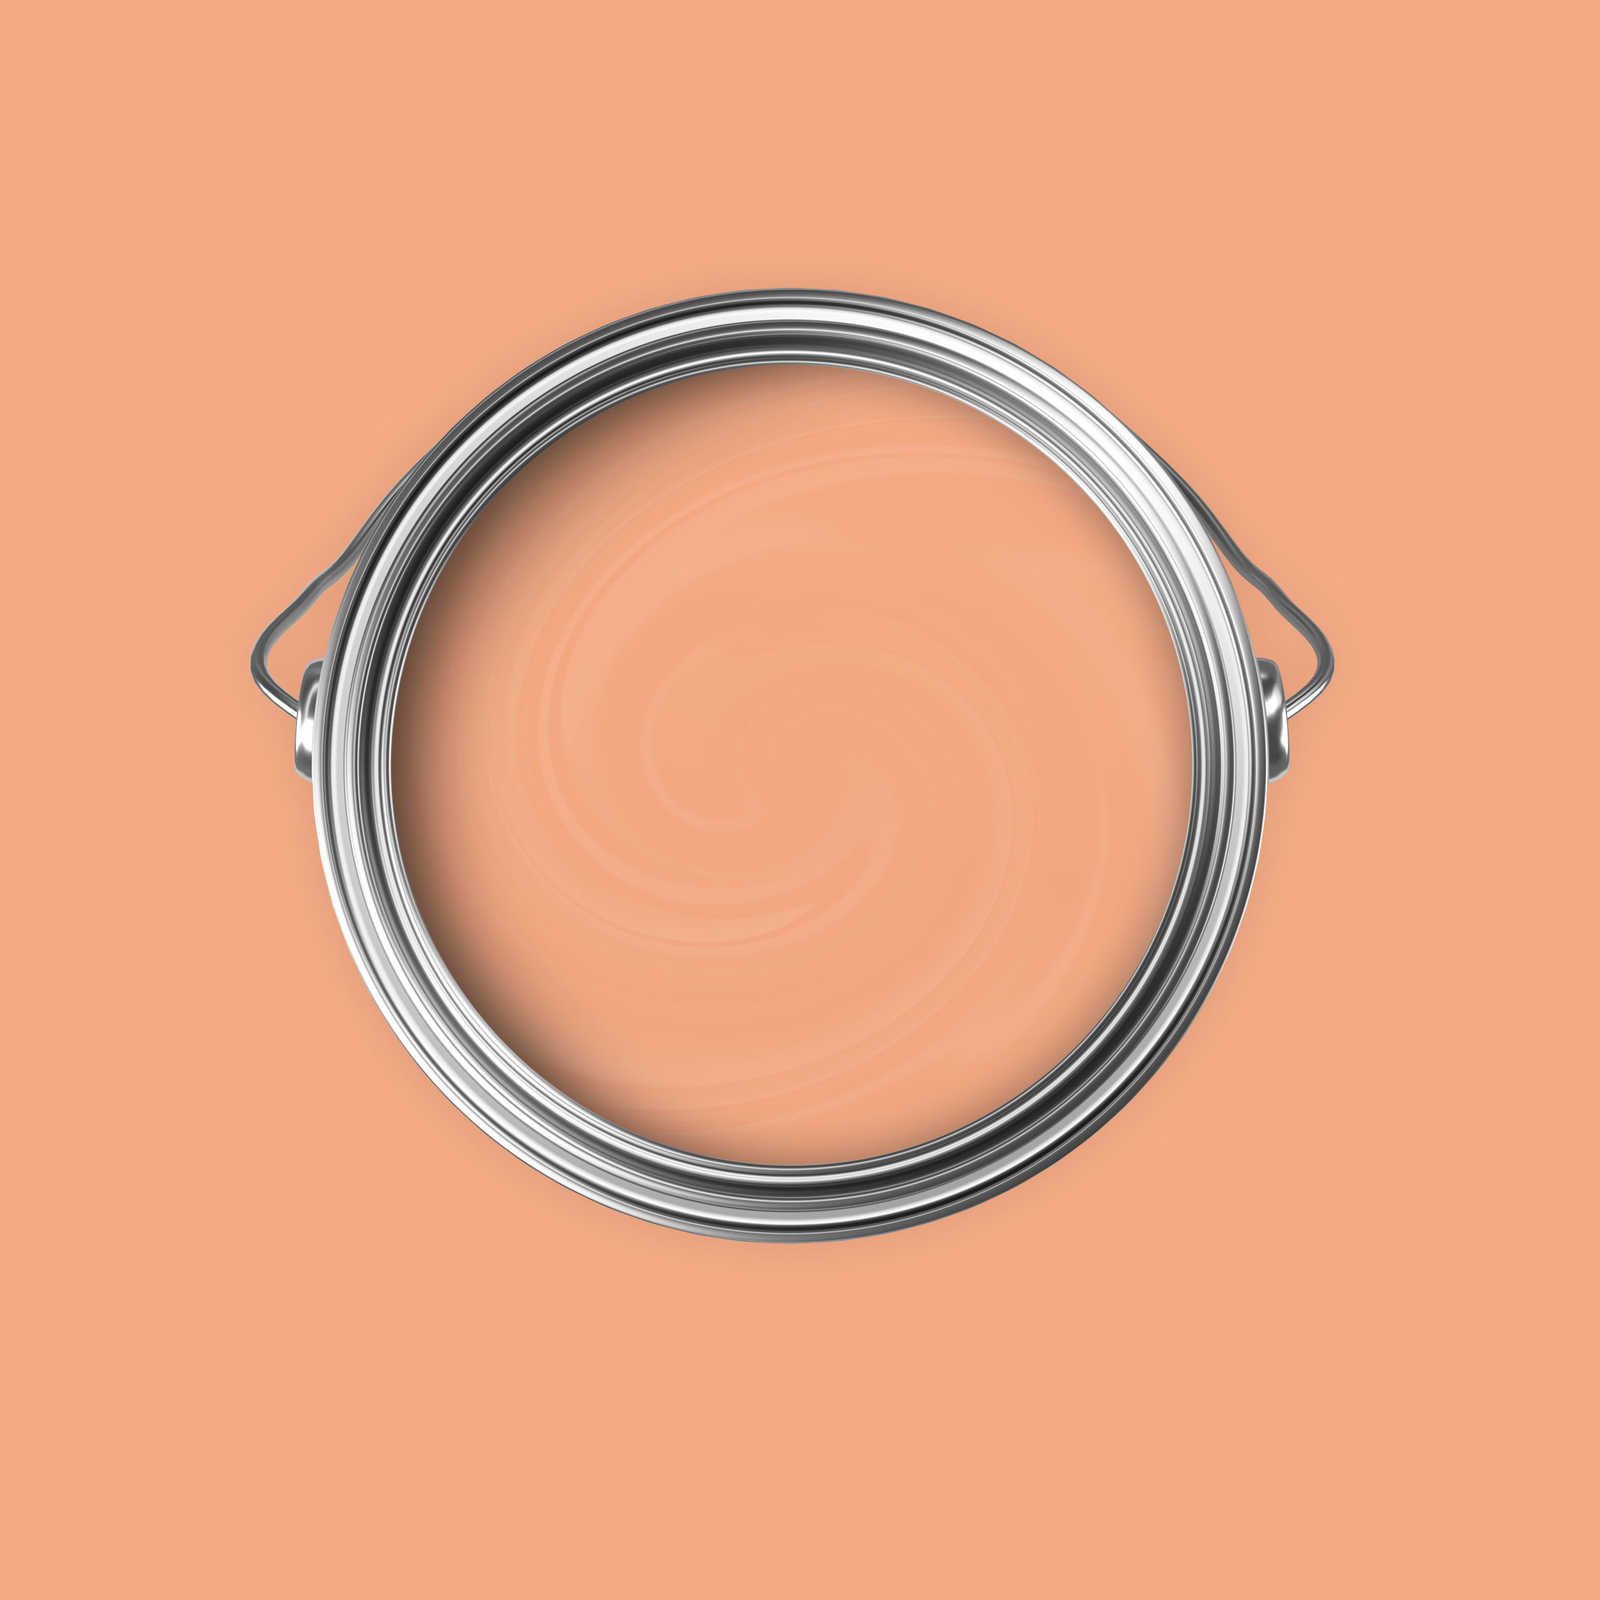             Premium Wandfarbe freundliches Lachs »Active Apricot« NW913 – 5 Liter
        